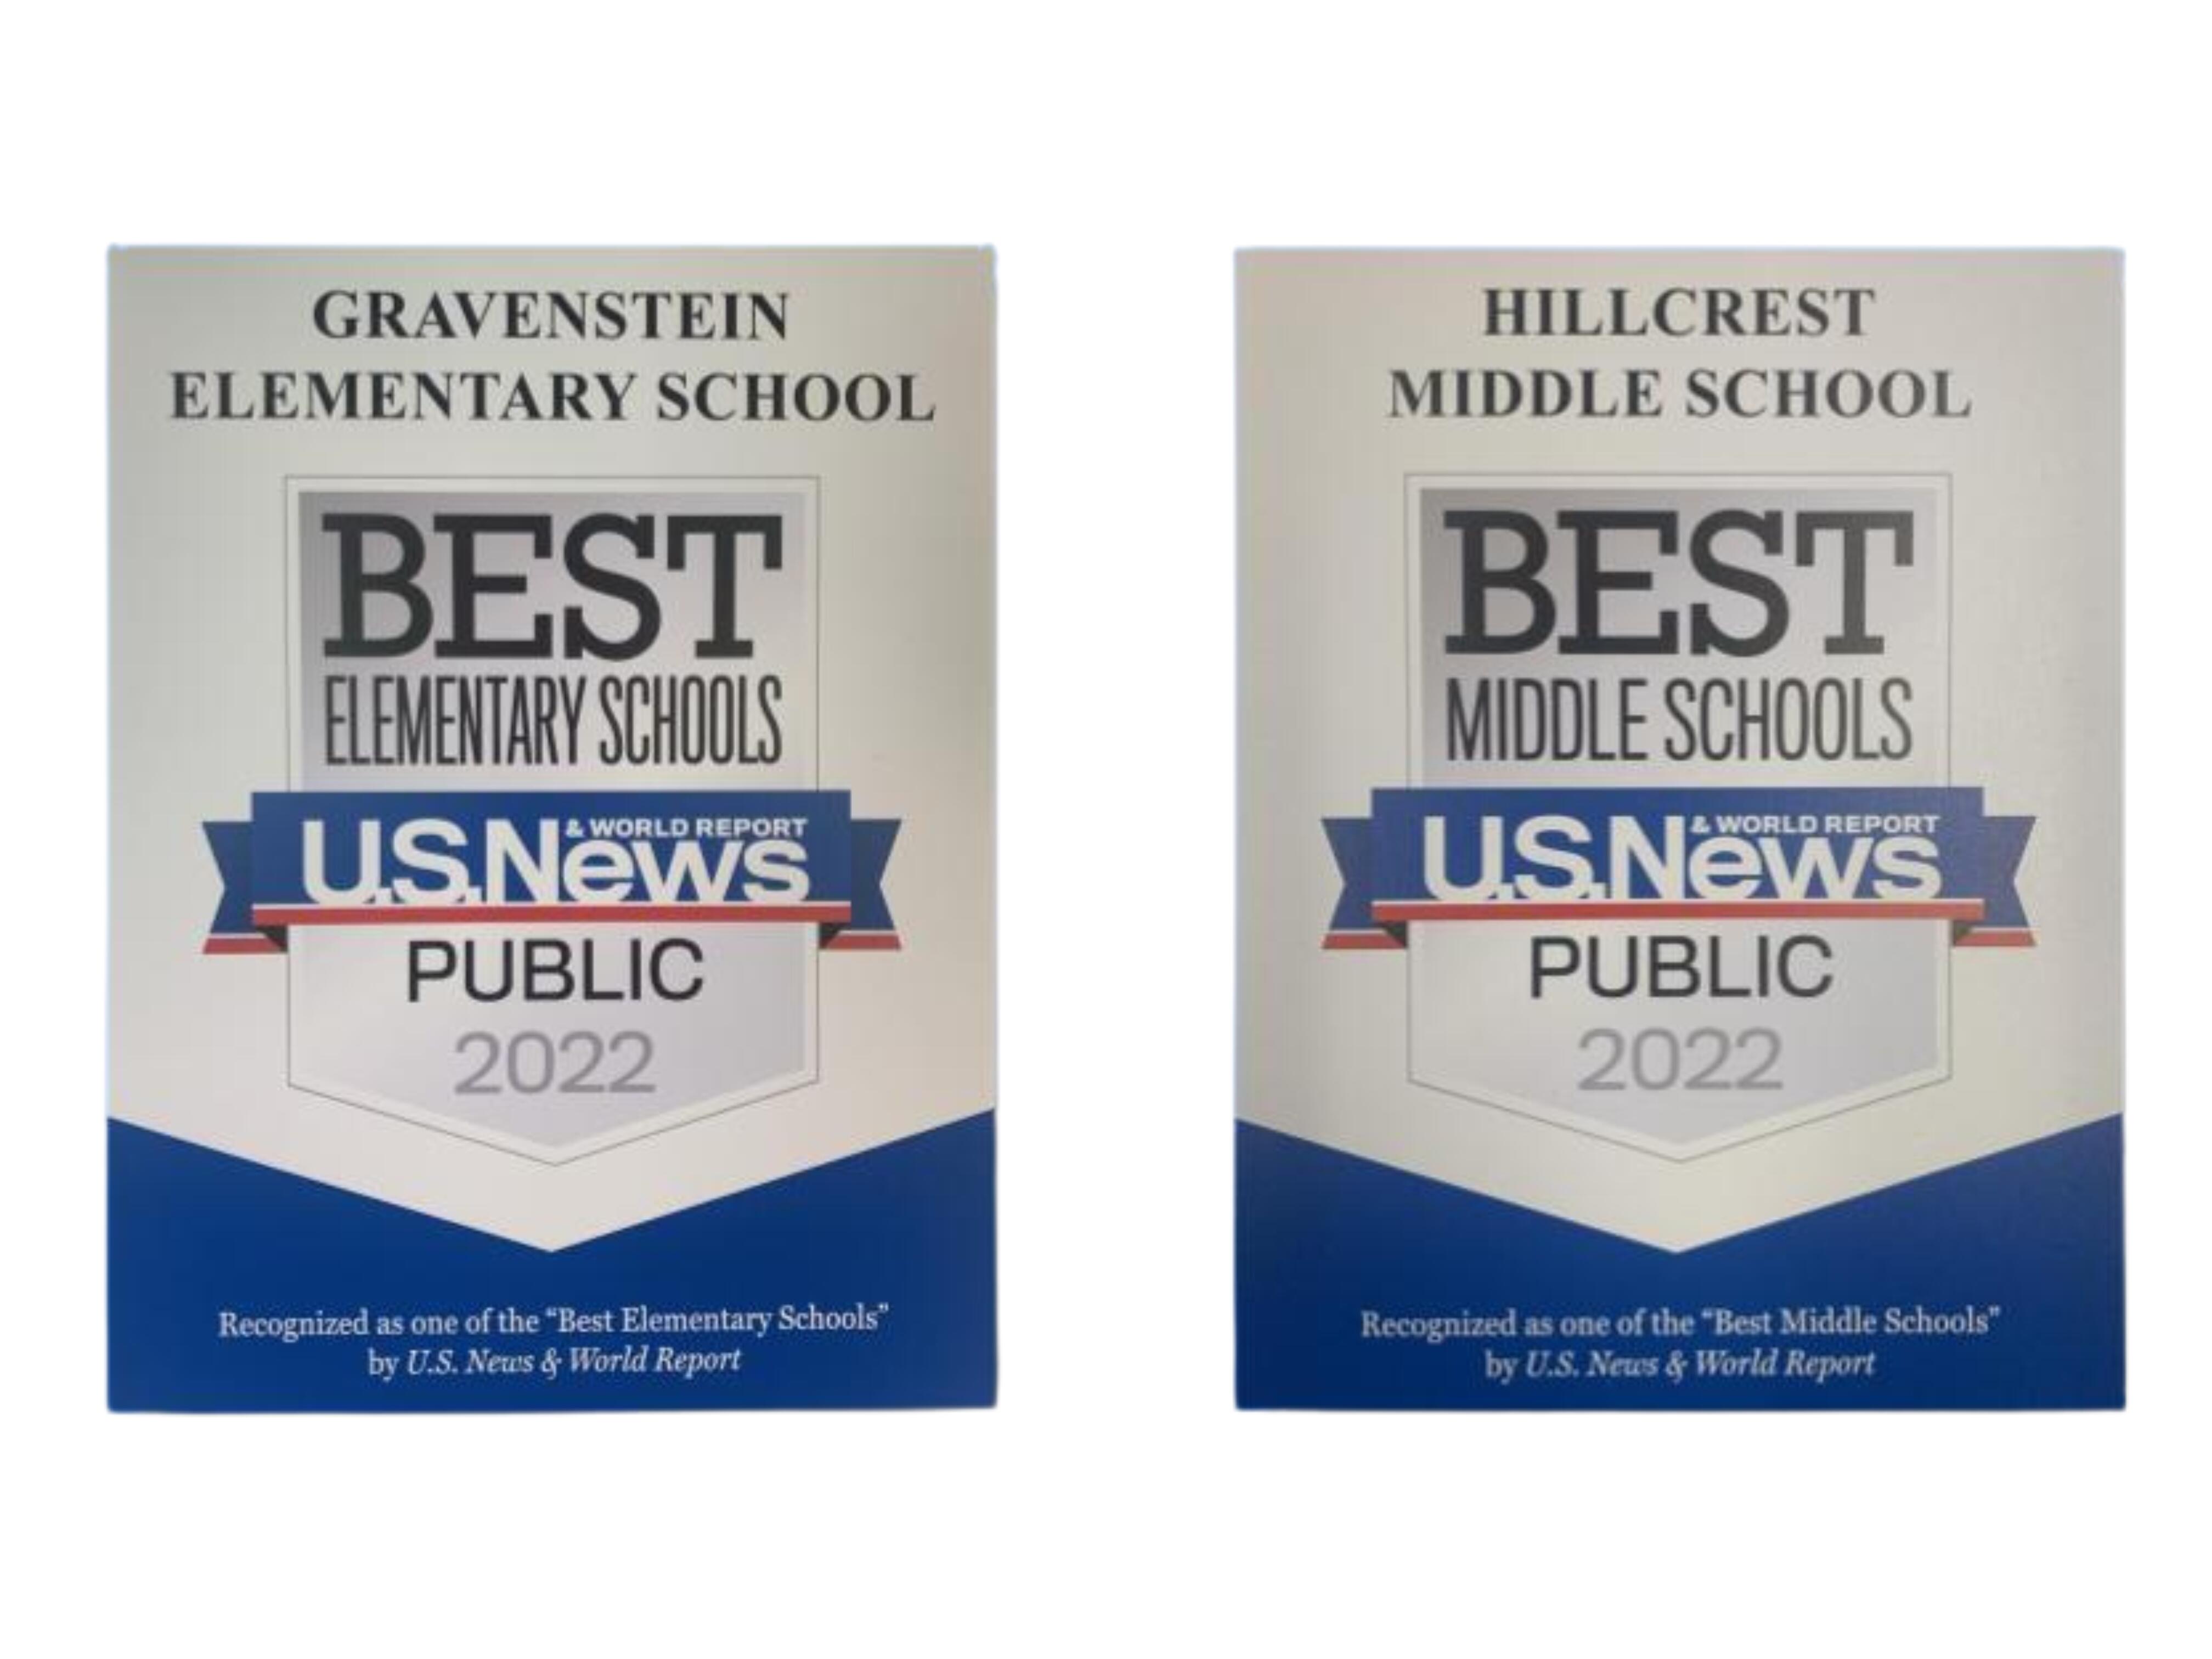 Best Elementary Schools in California - Gravenstein Elementary School, US News and World Report 